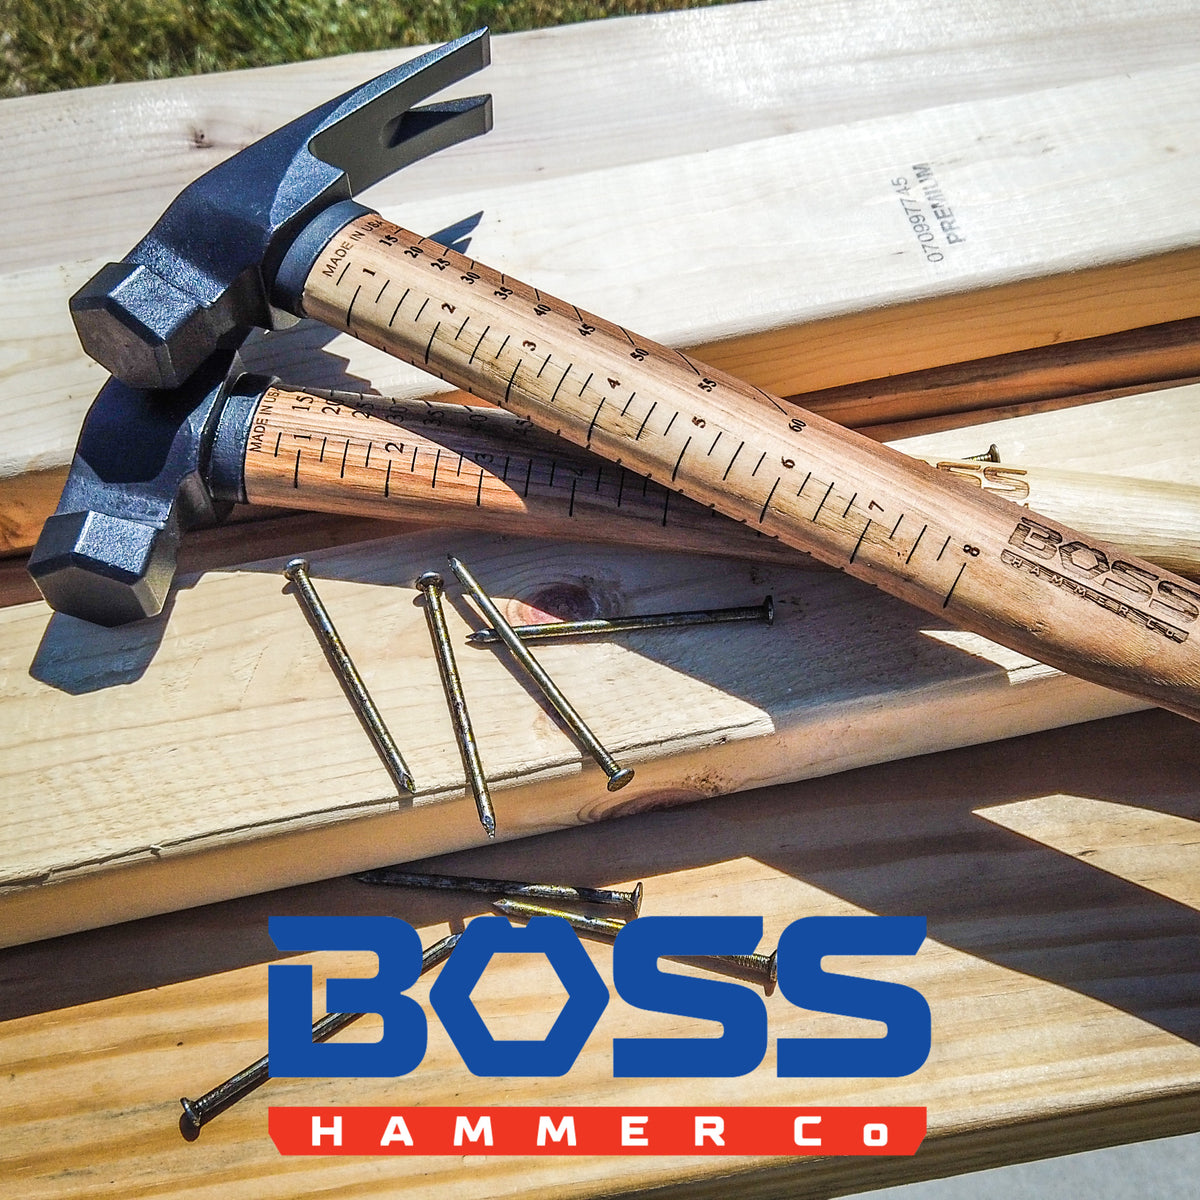 Boss Hammer Co is NAILING this presentation 🔨 #bosshammers #bosshamme, boss  hammer